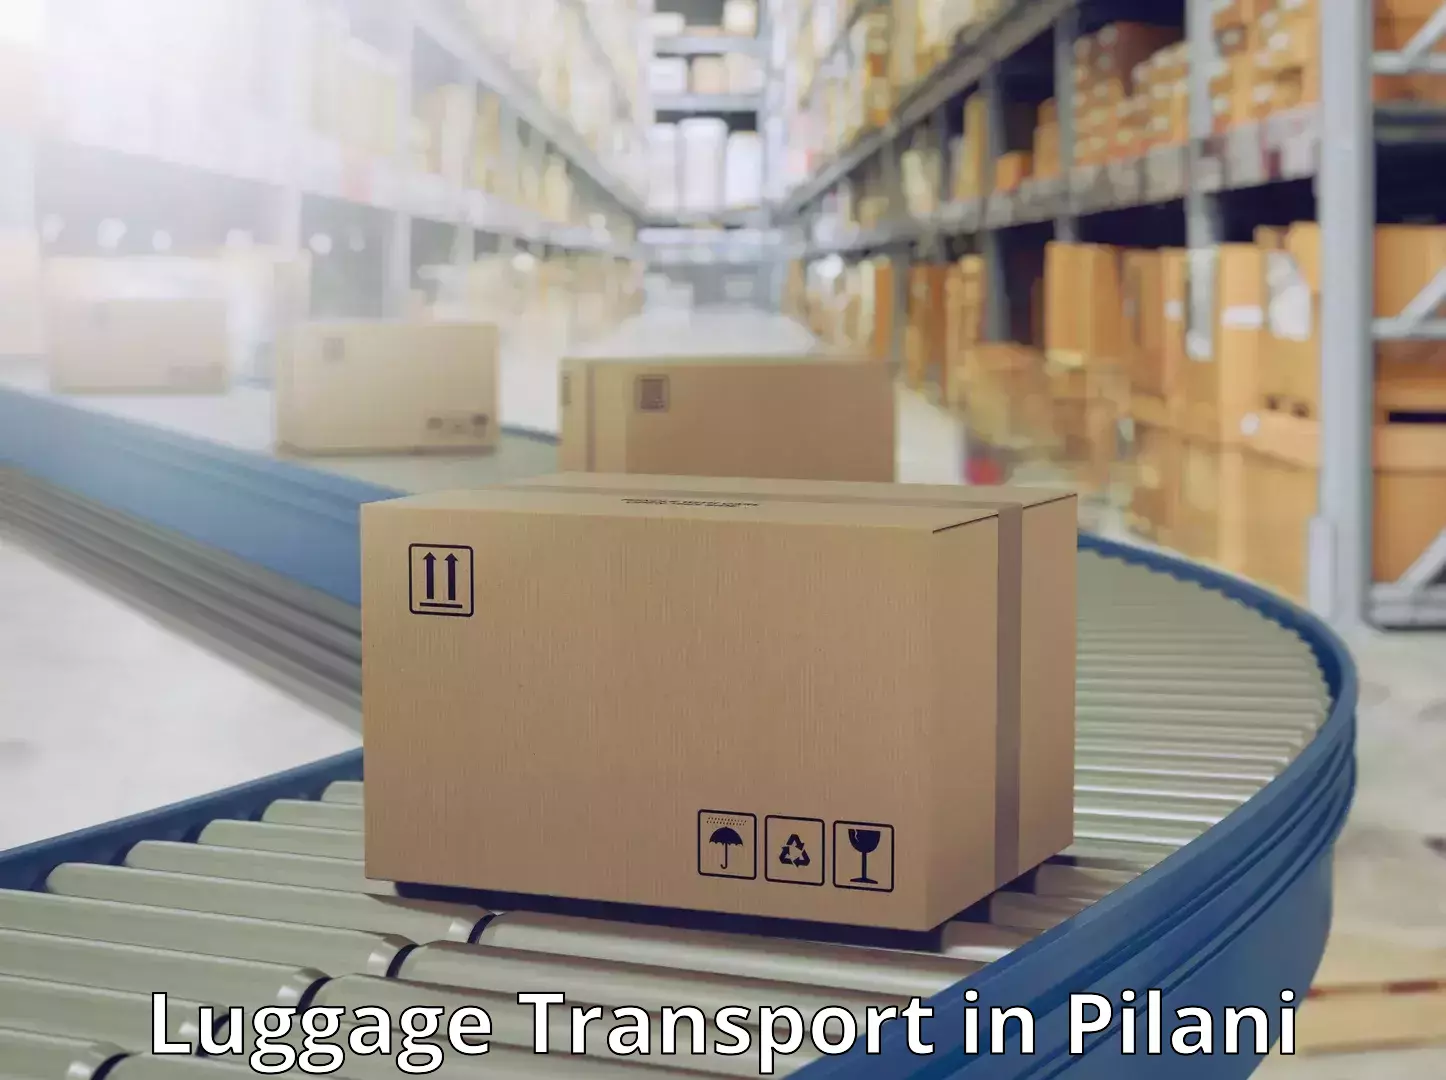 Heavy luggage shipping in Pilani